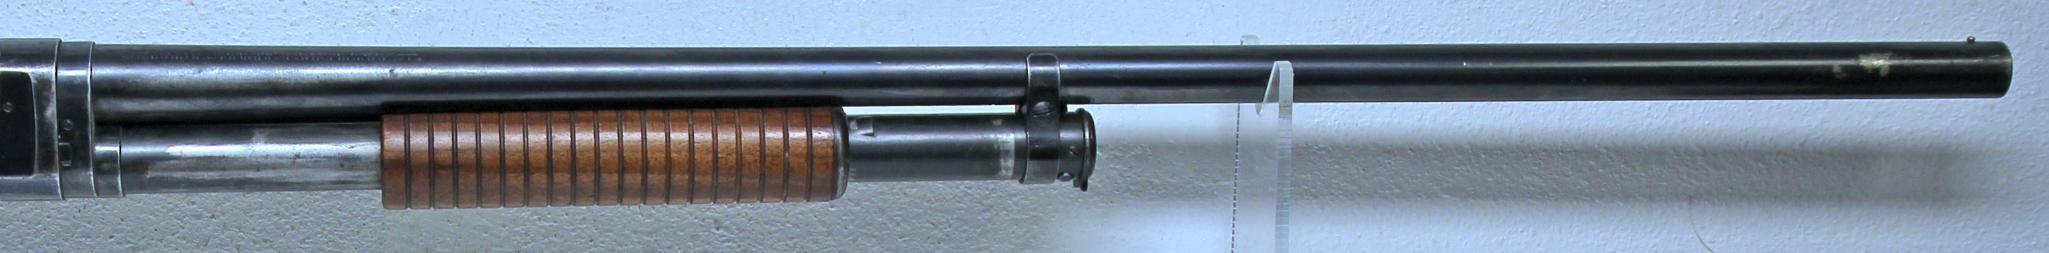 Winchester Model 97 12 Ga. Pump Action Shotgun 2 3/4" Chamber Full Choke 30" Barrel SN#965843